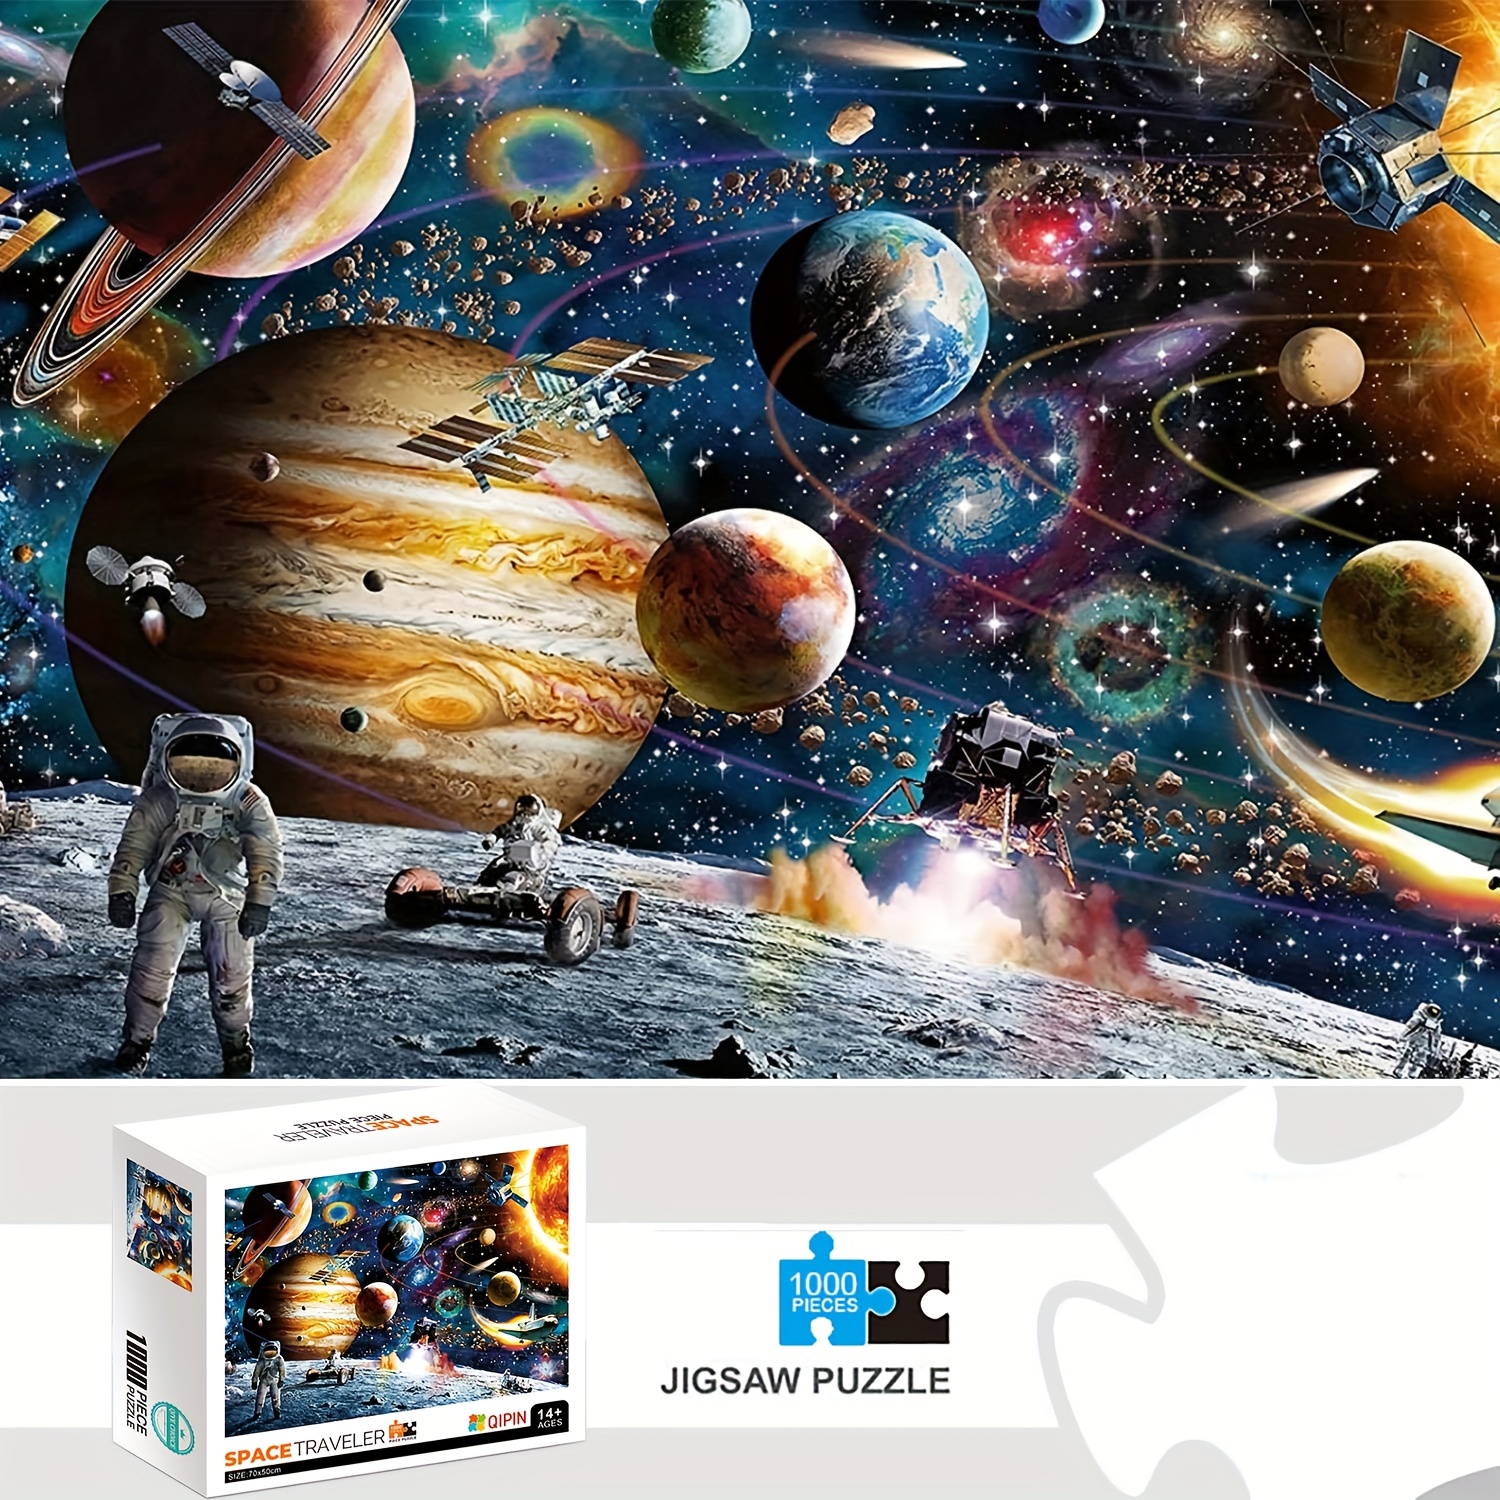 Space Traveler 1000 Piece Jigsaw Puzzle